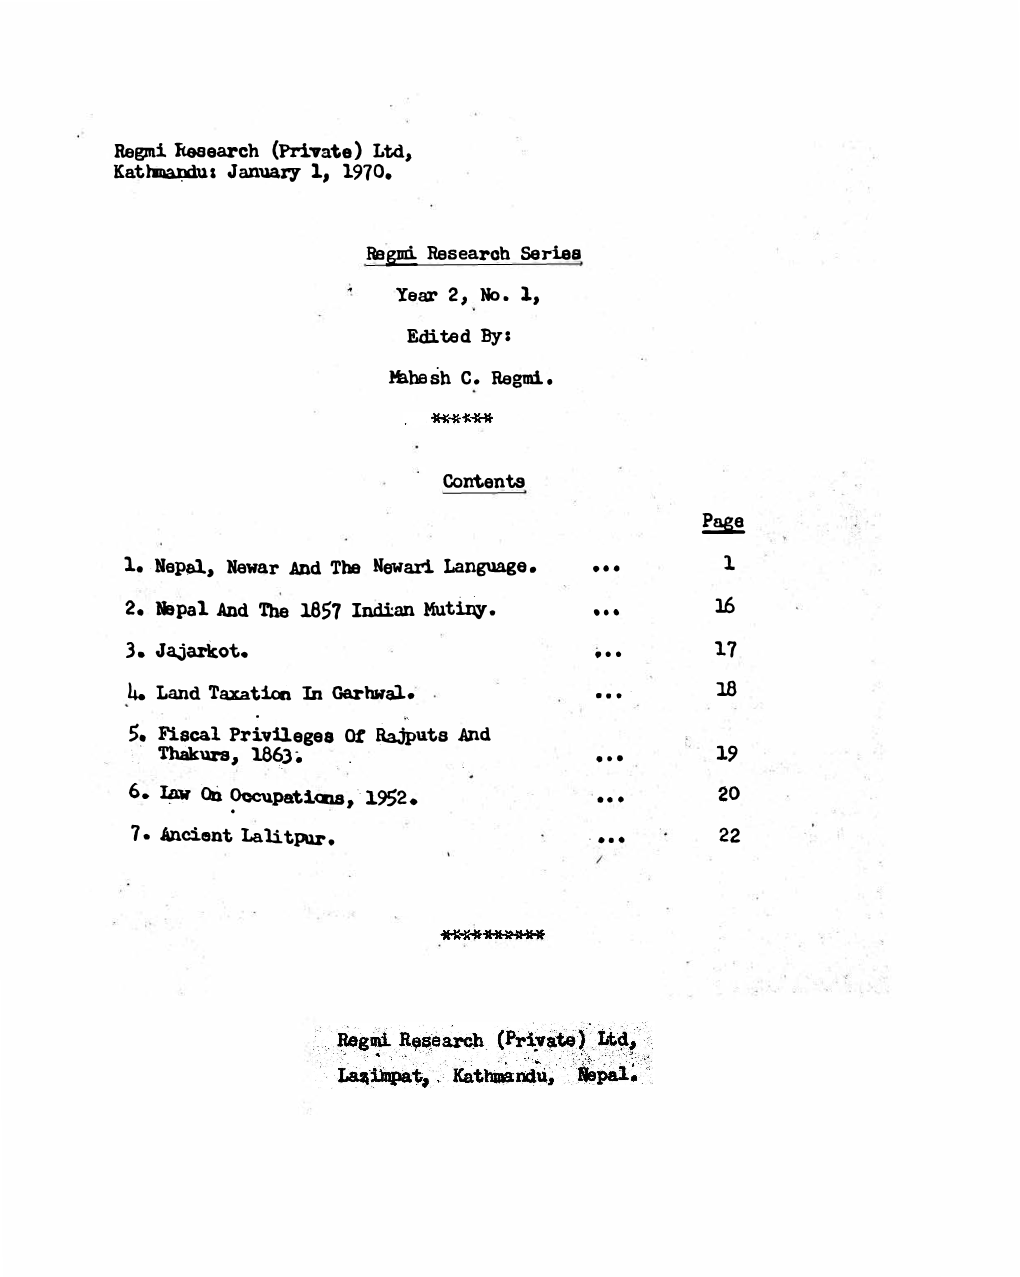 Regmi Research Series, Year 2, No. 1, Jan. 1, 1970